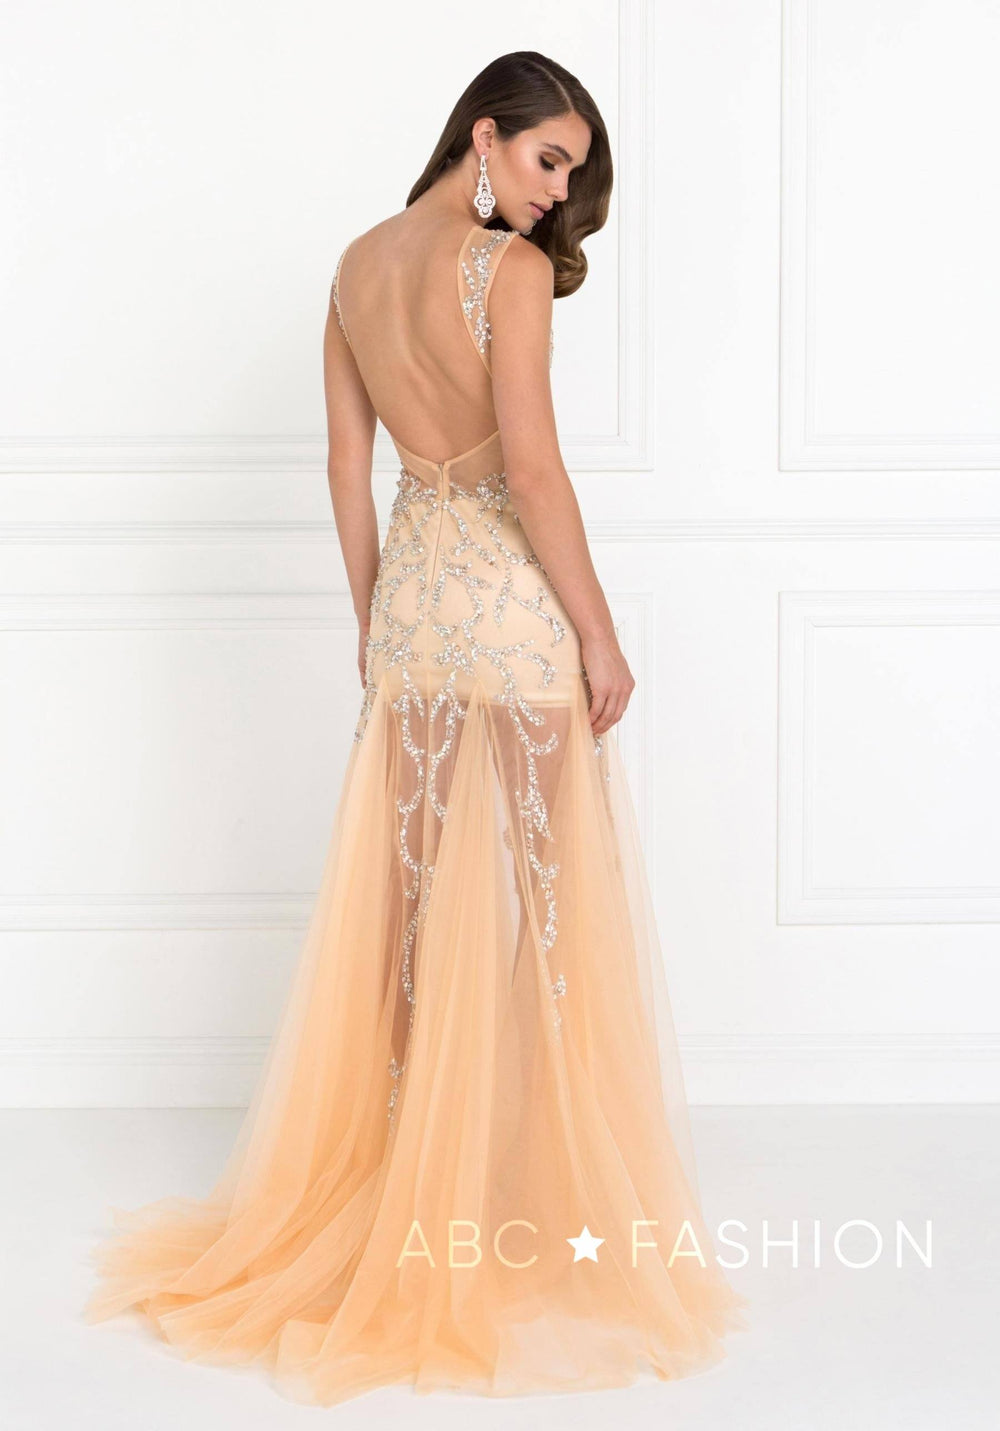 Jeweled Long Sleeveless Sheer Nude Dress by Elizabeth K GL2153-Long Formal Dresses-ABC Fashion